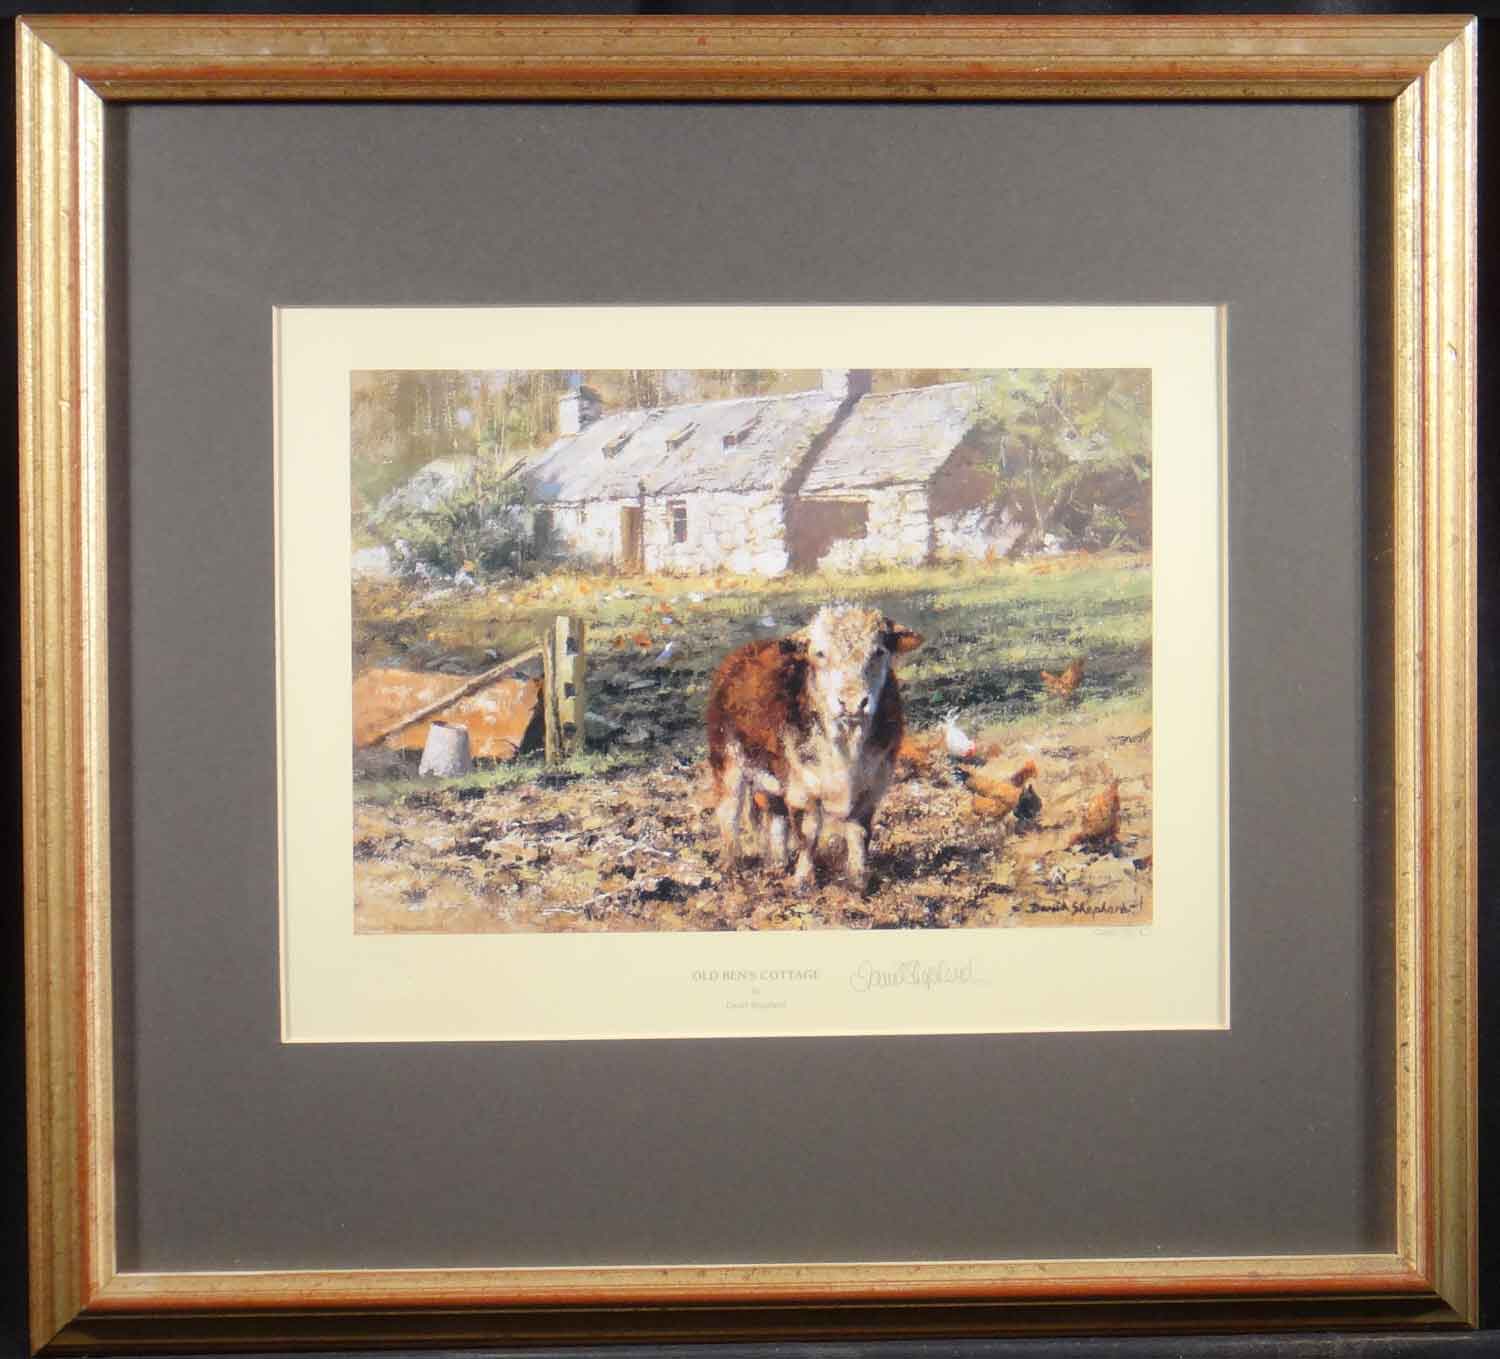 david shepherd, Old Ben's Cottage, print